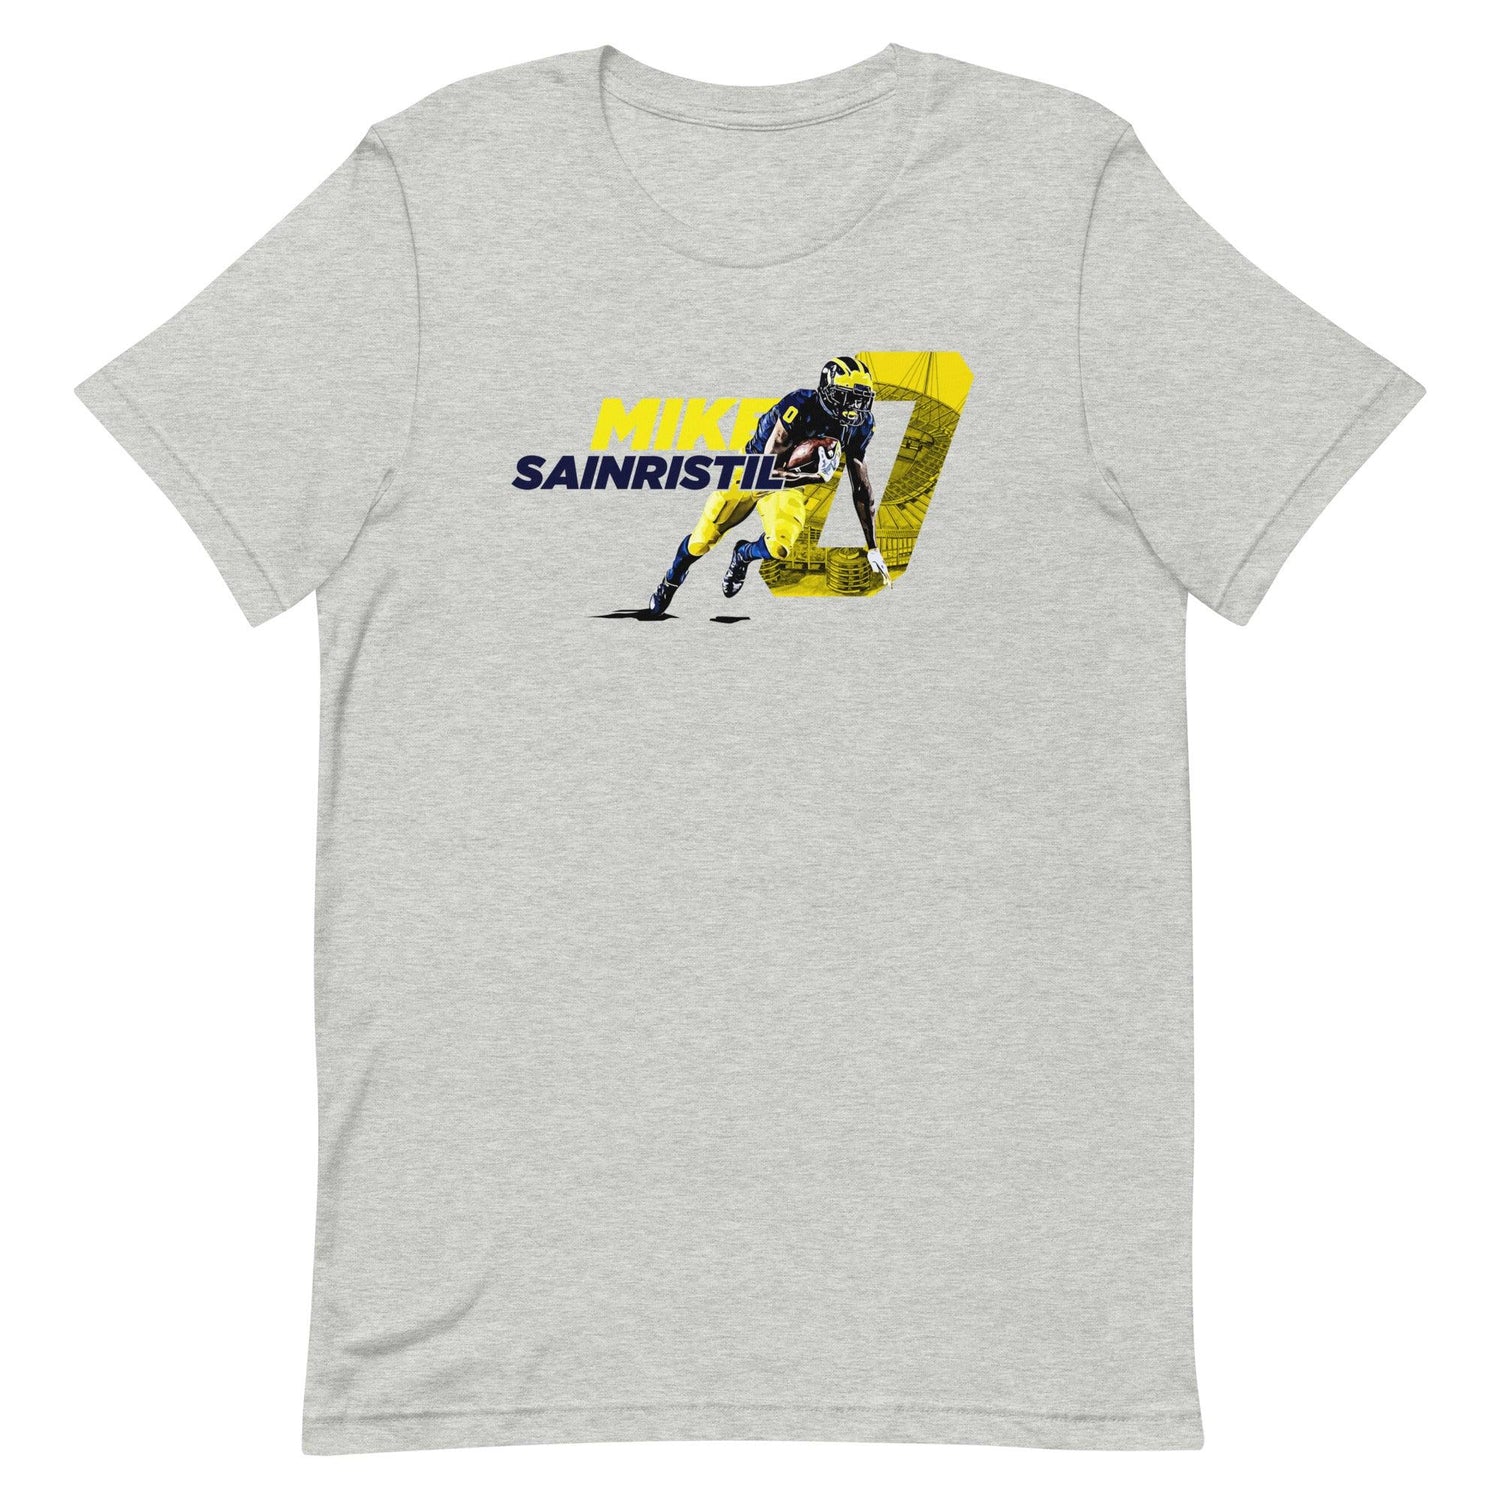 Mike Sainristil "Gameday" t-shirt - Fan Arch